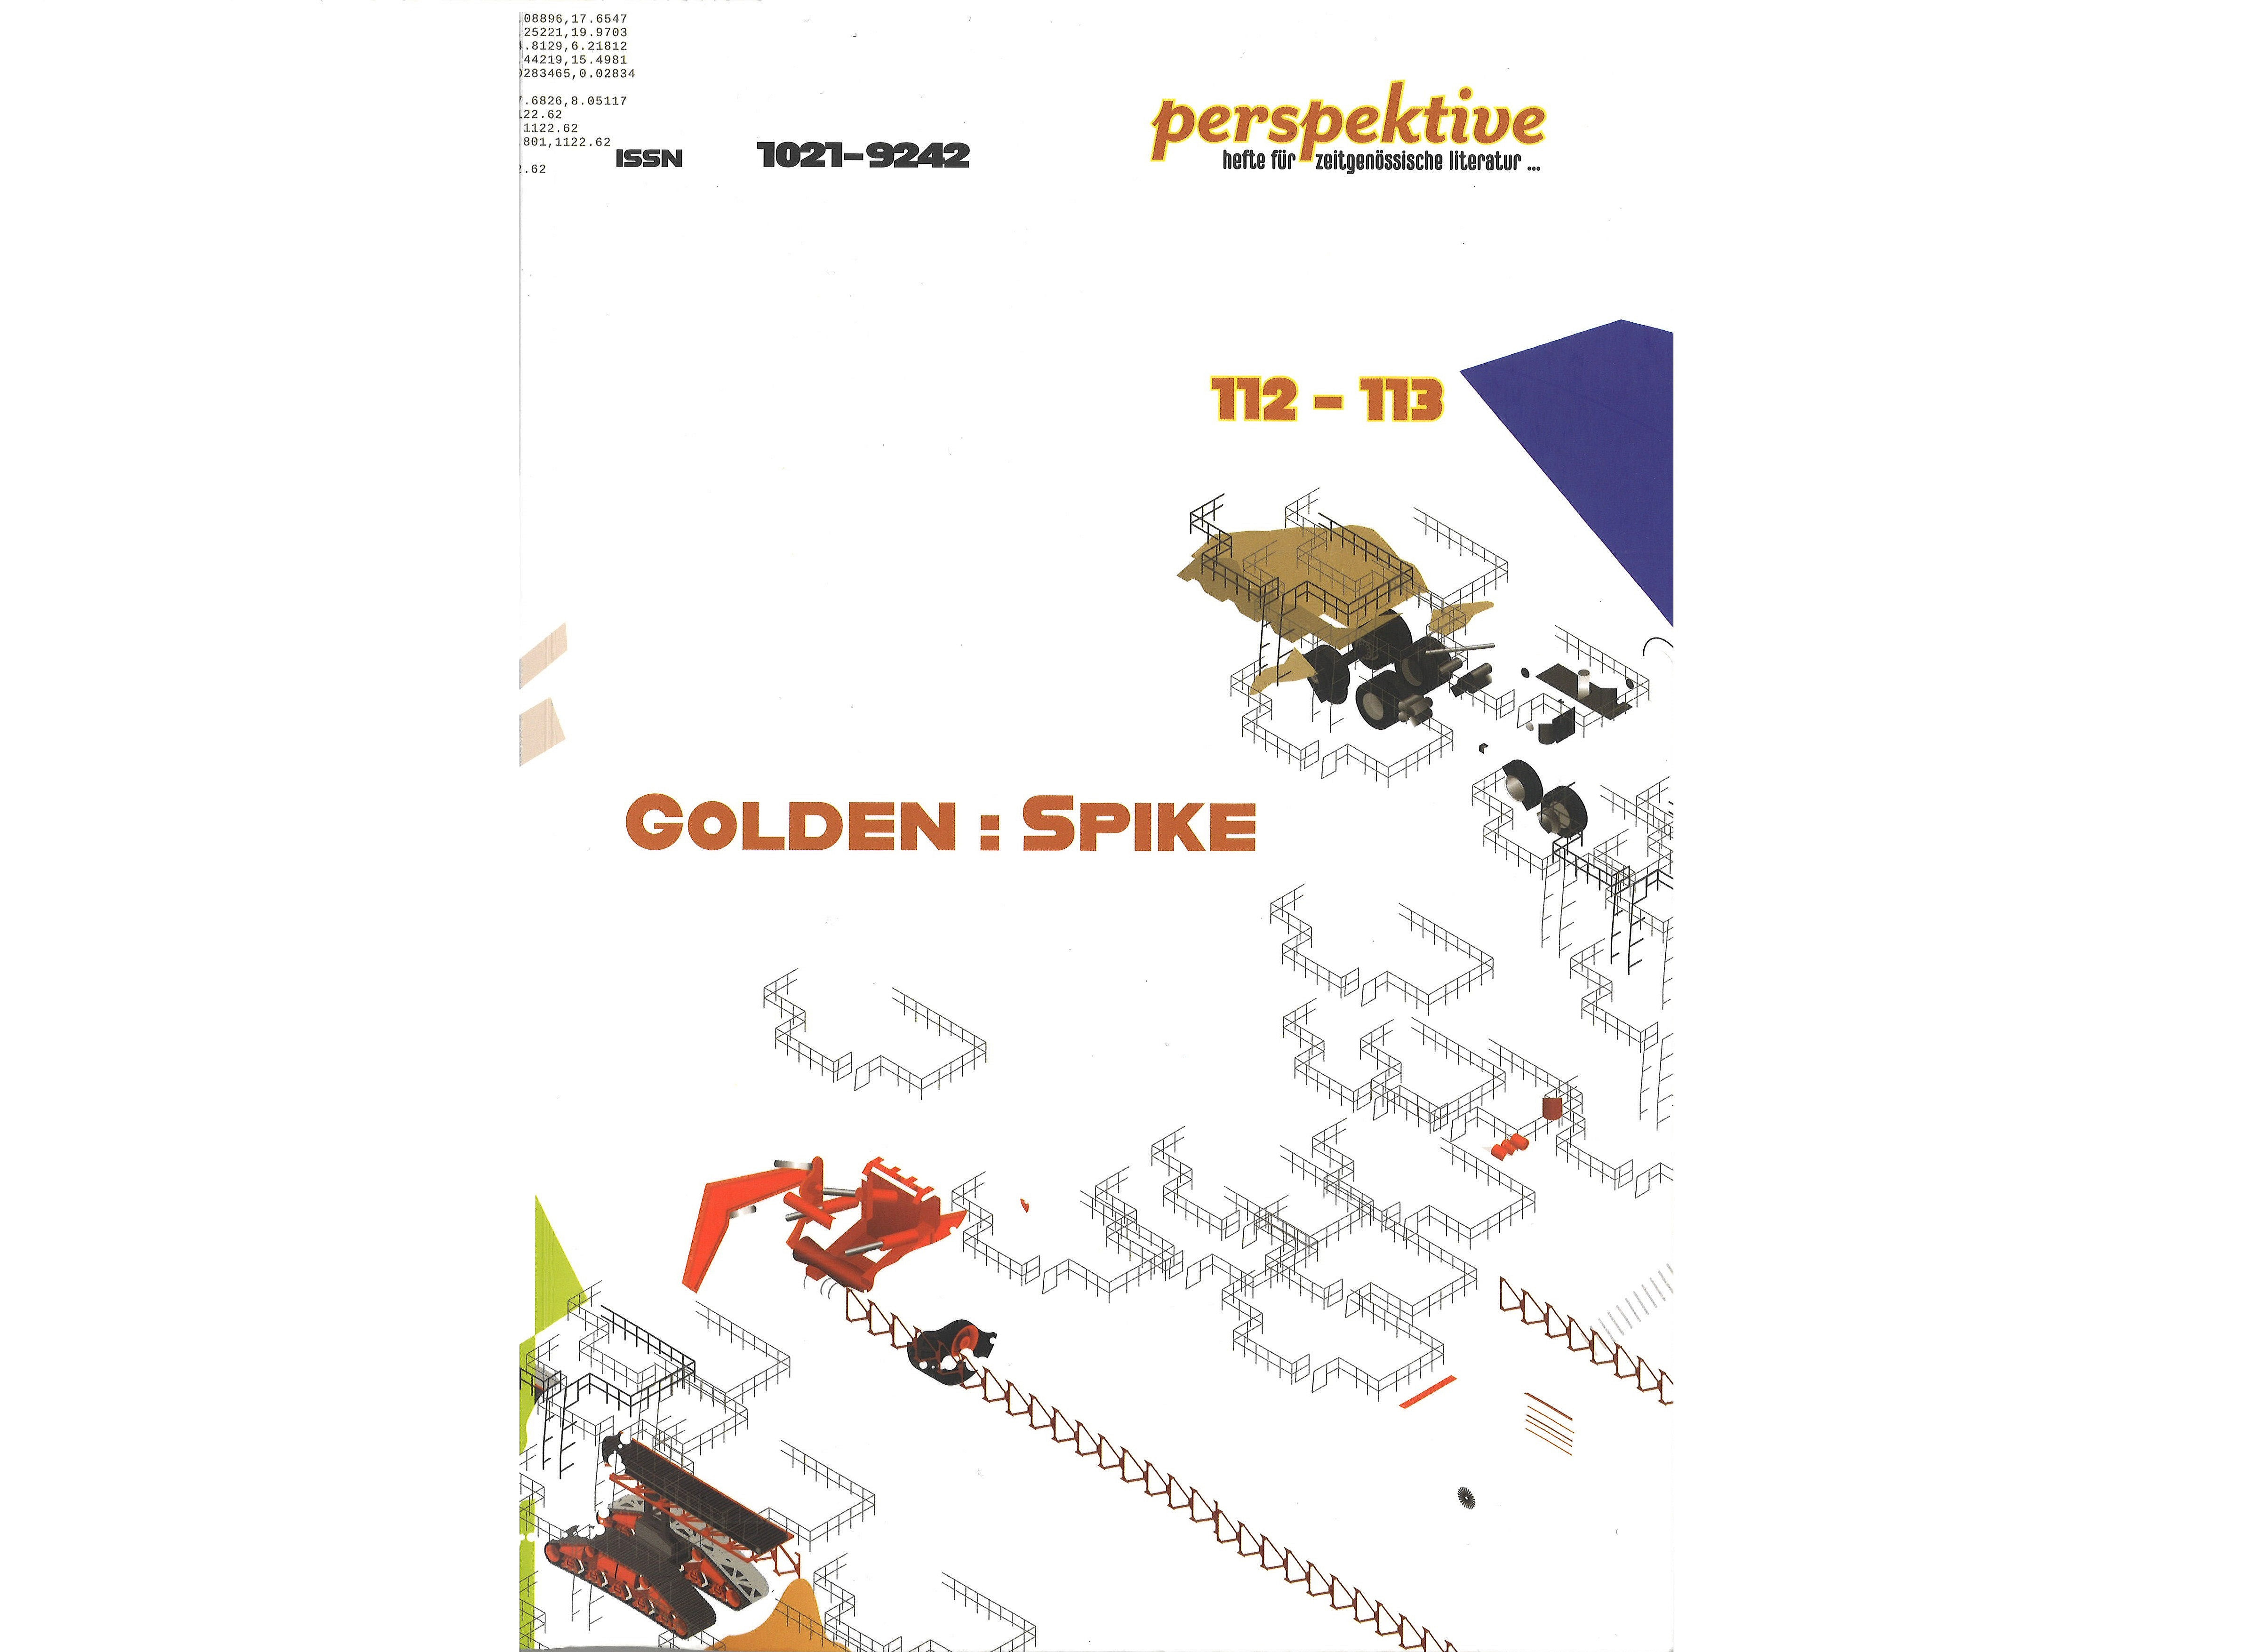 Cover "Golden Spike", Perspektive H. 112-113 